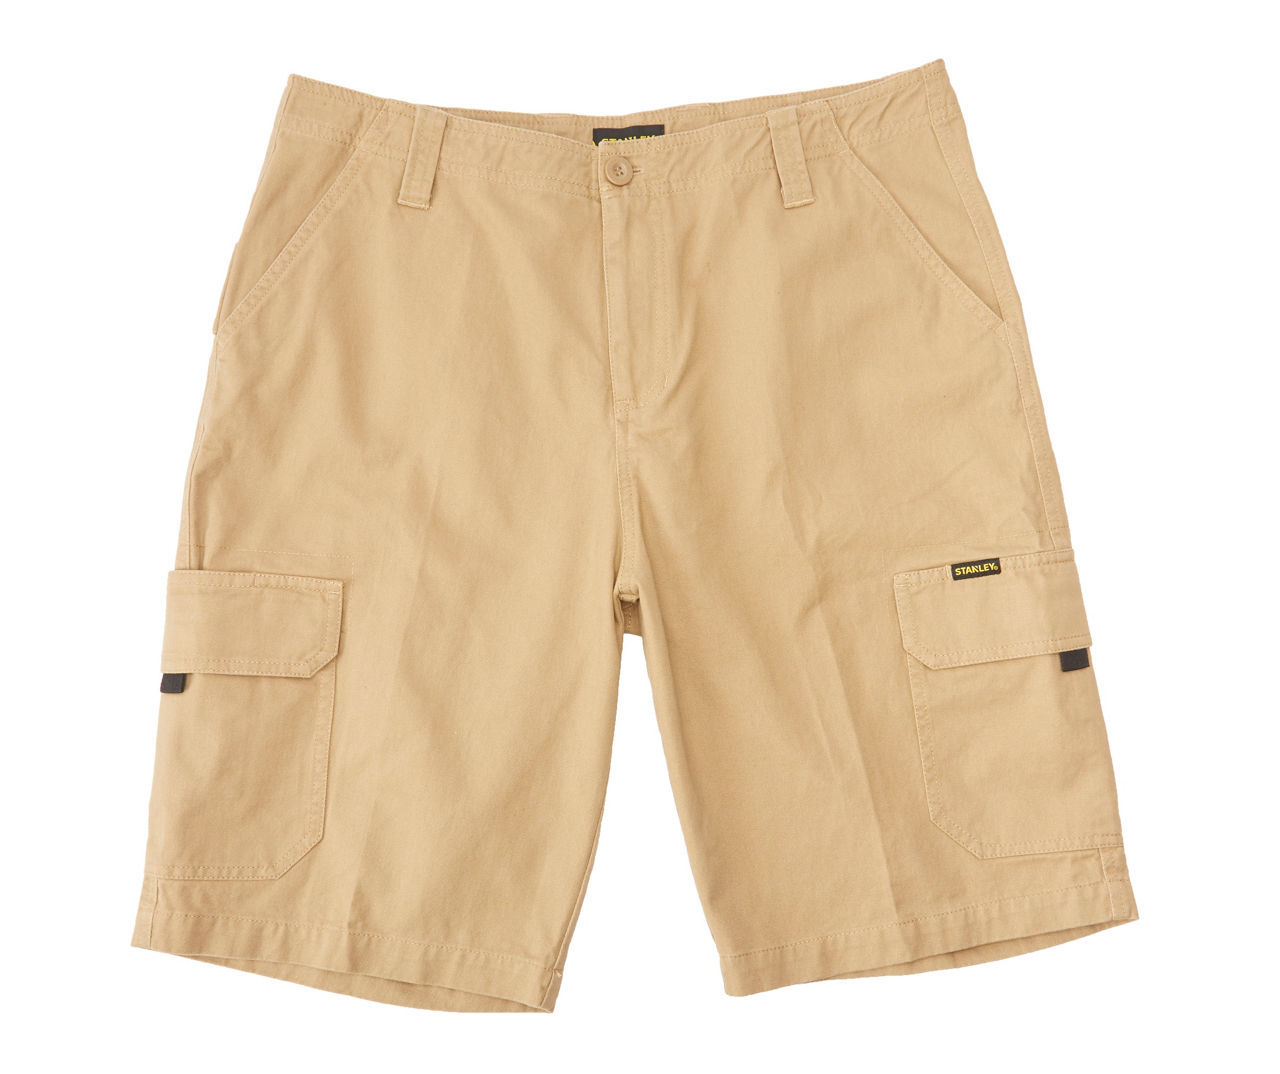 NEW Stanley Cargo Shorts Mens 40 Brown Cargo Khaki Pocket Outdoor Preppy  Men 40$